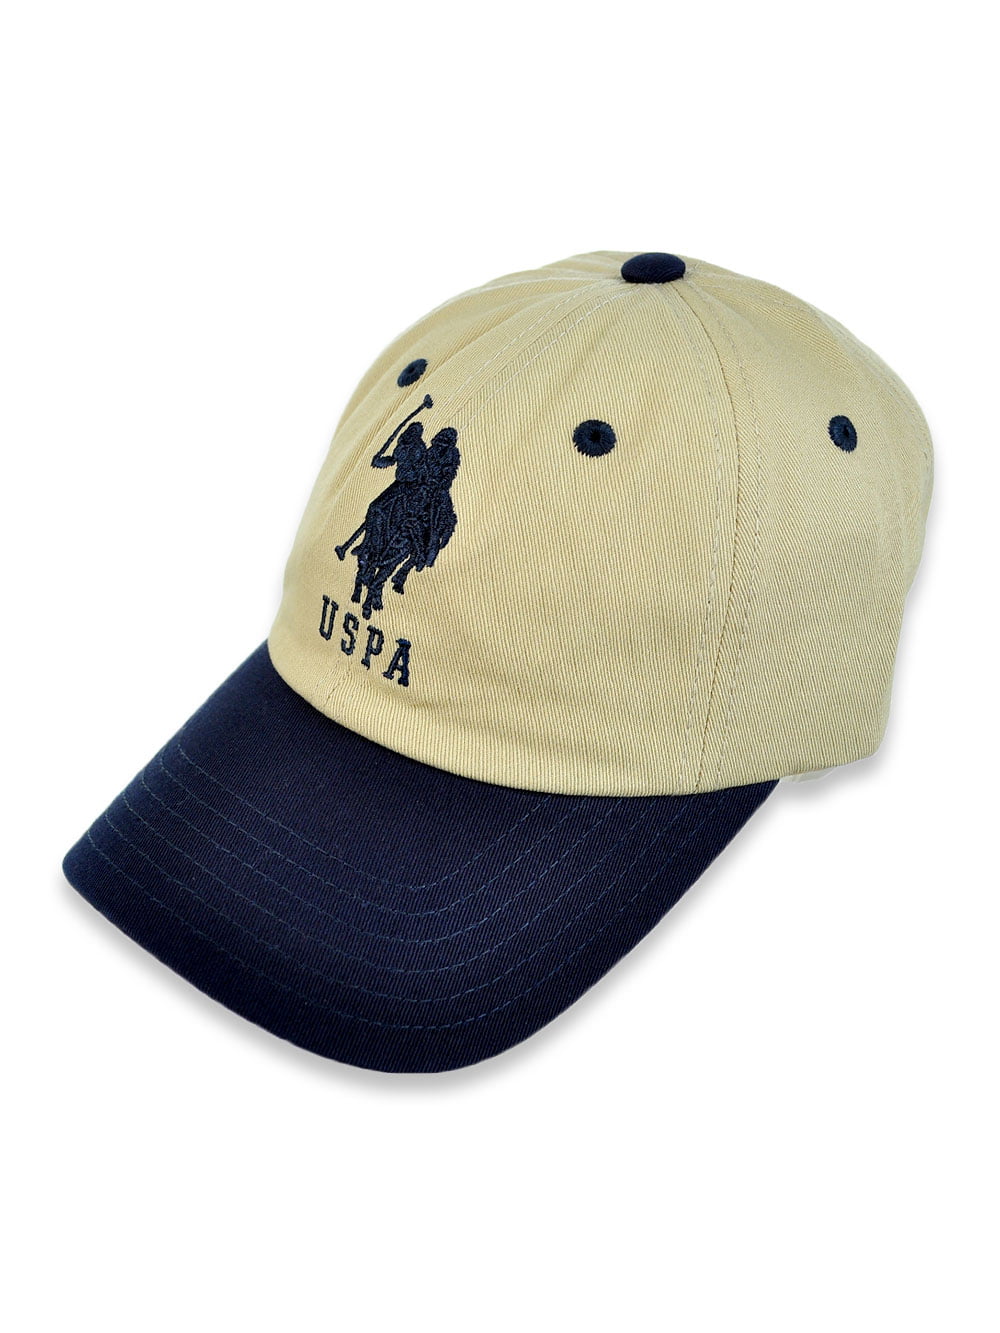 Polo Assn. Boys' Baseball Cap (Child One Size) khaki, one size 